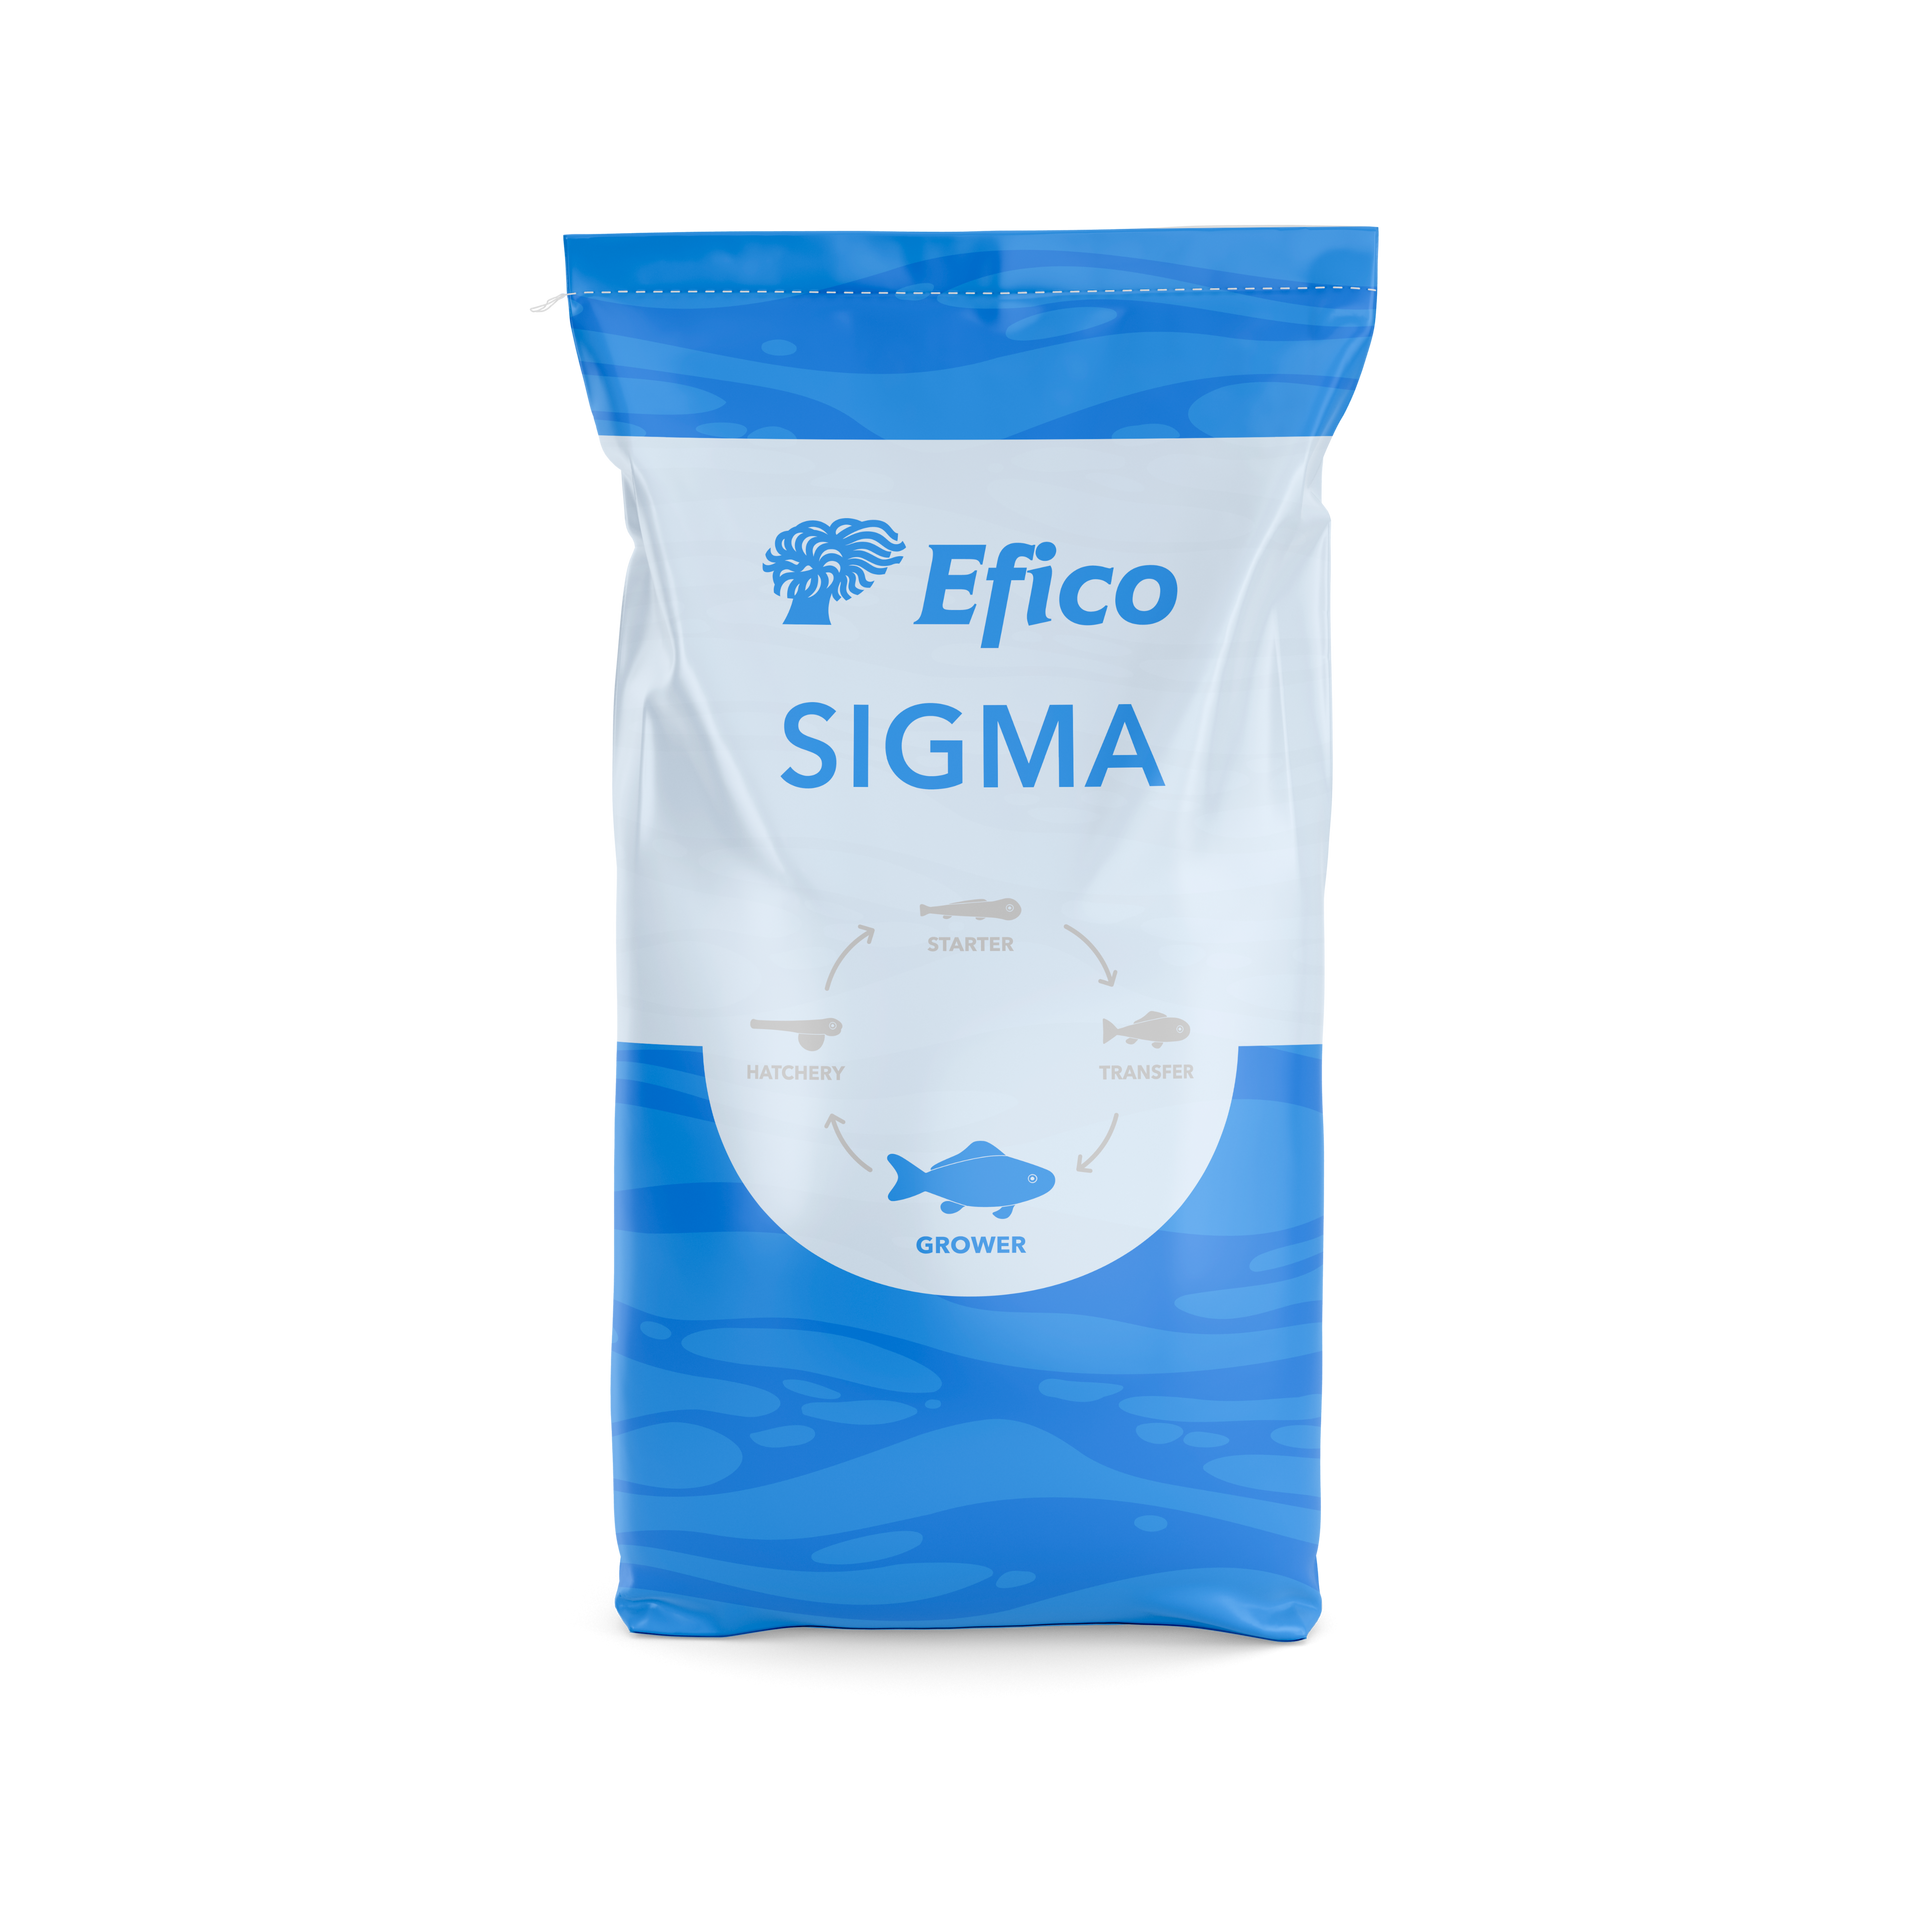 BioMar's Efico Sigma high performance feed